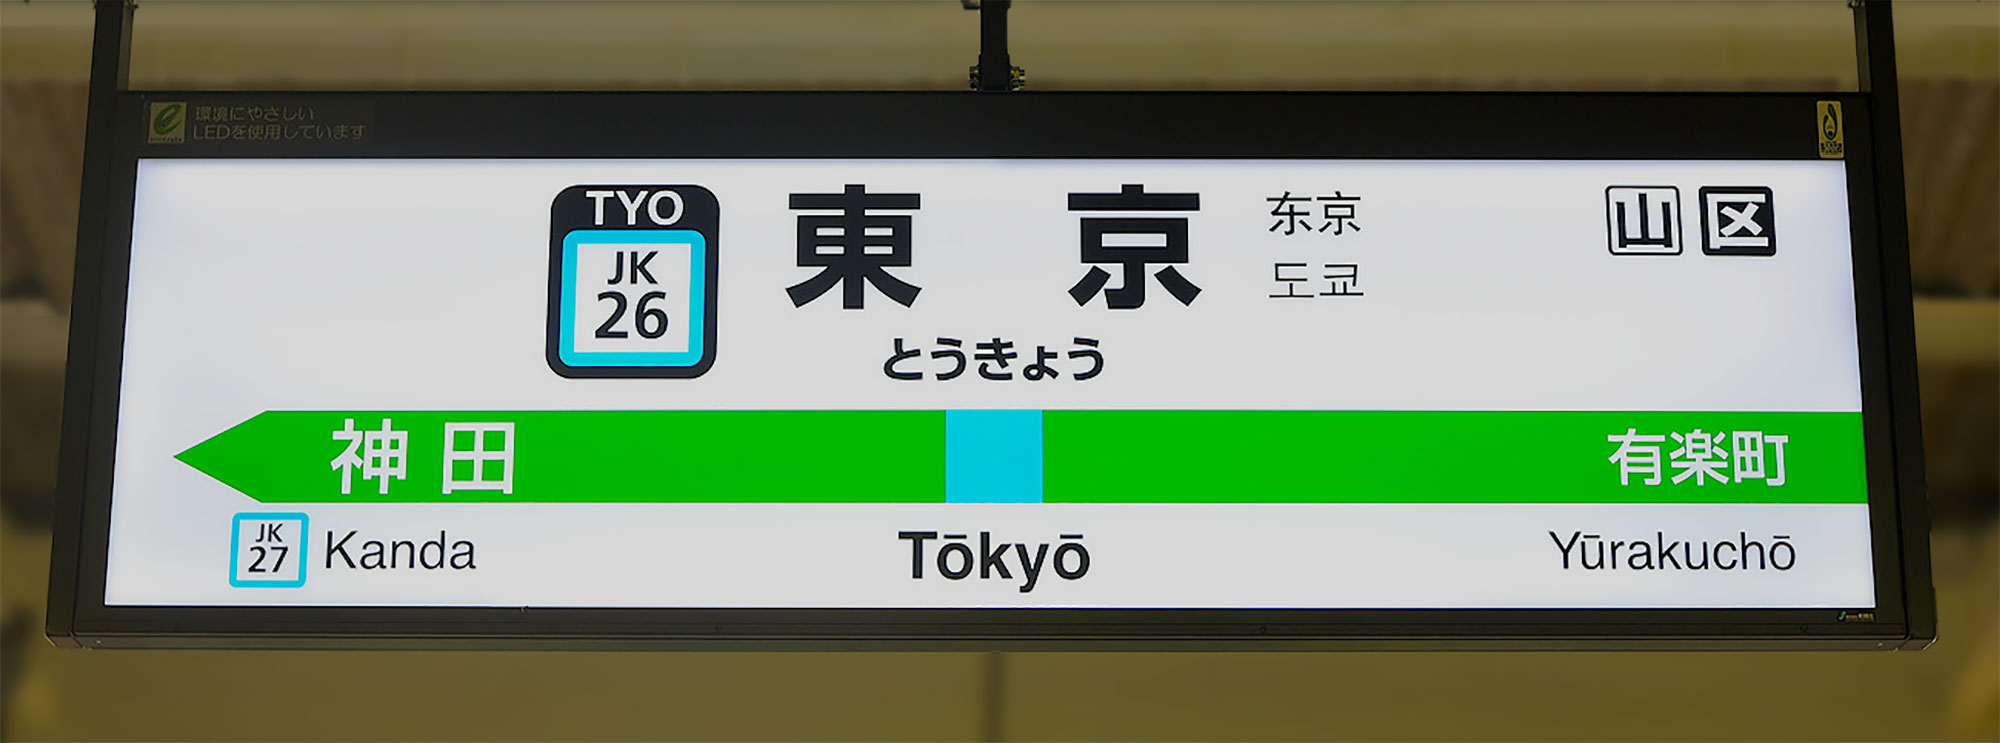 Typografie in Japan, Bahnhofsschild Tokyo